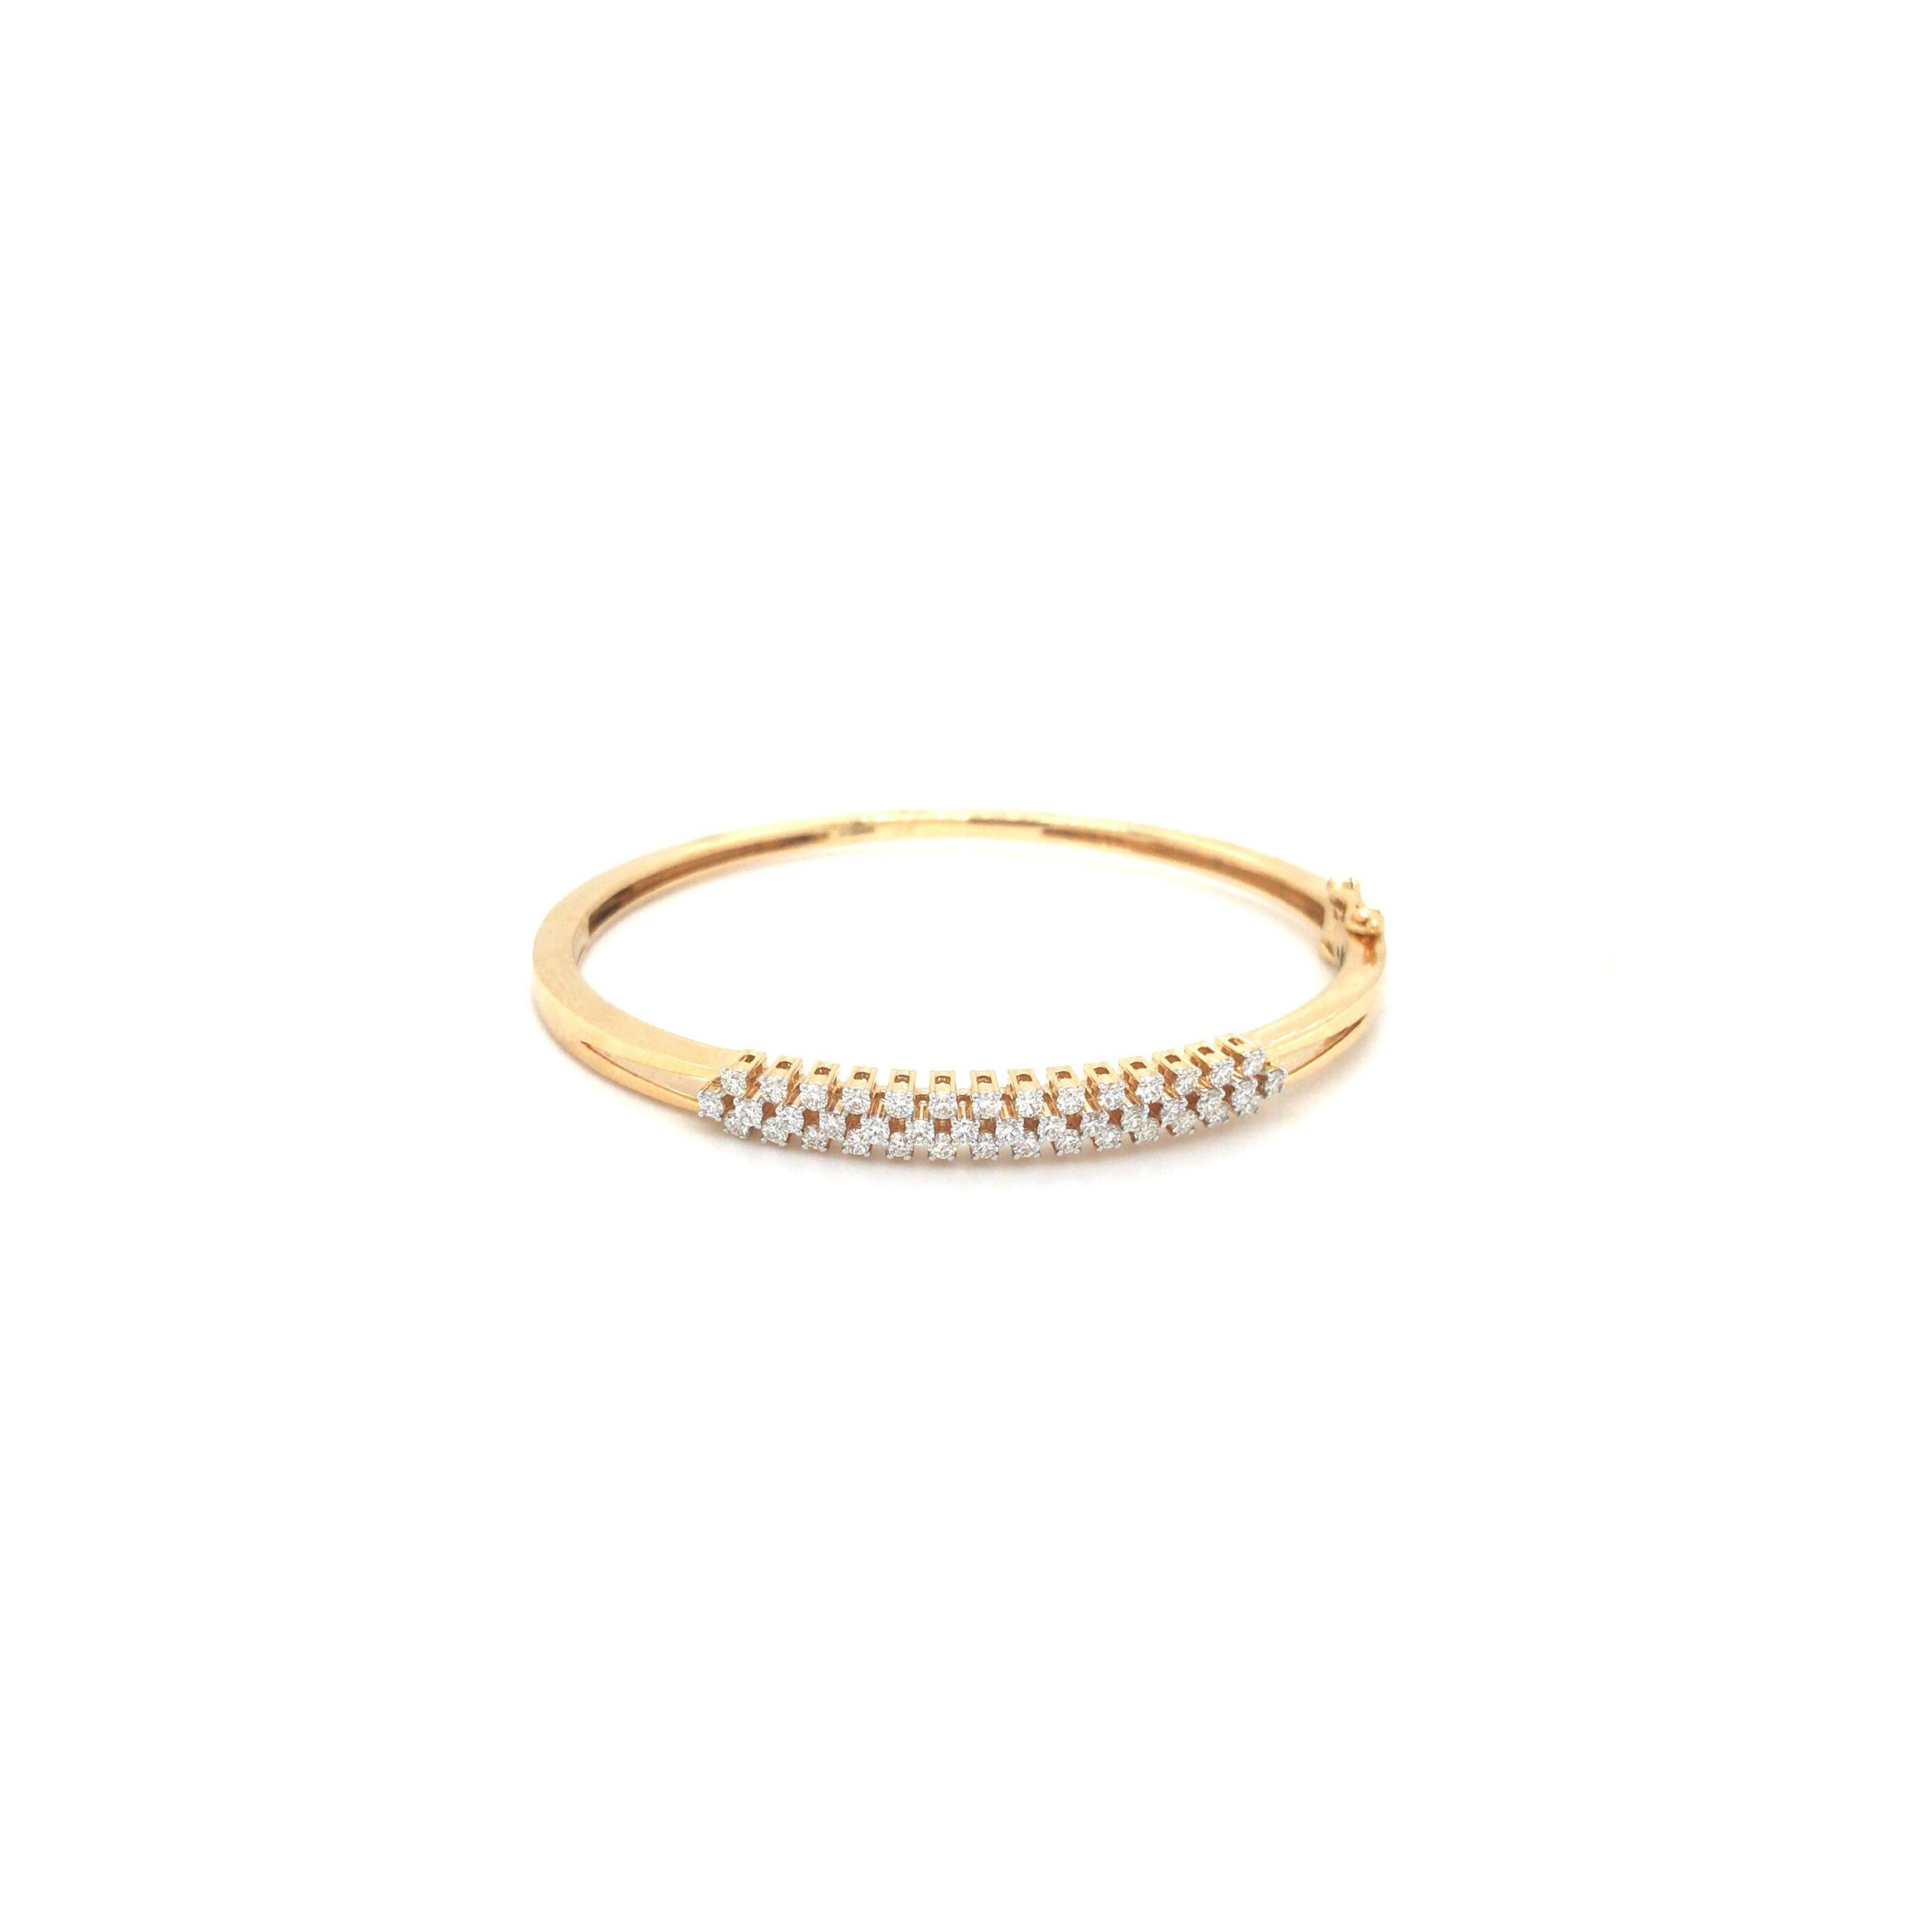 Buy 18K Real Diamond Bracelet for Women At jewelegance.com | Gold bracelet  simple, Diamond bracelet design, Jewelry bracelets gold